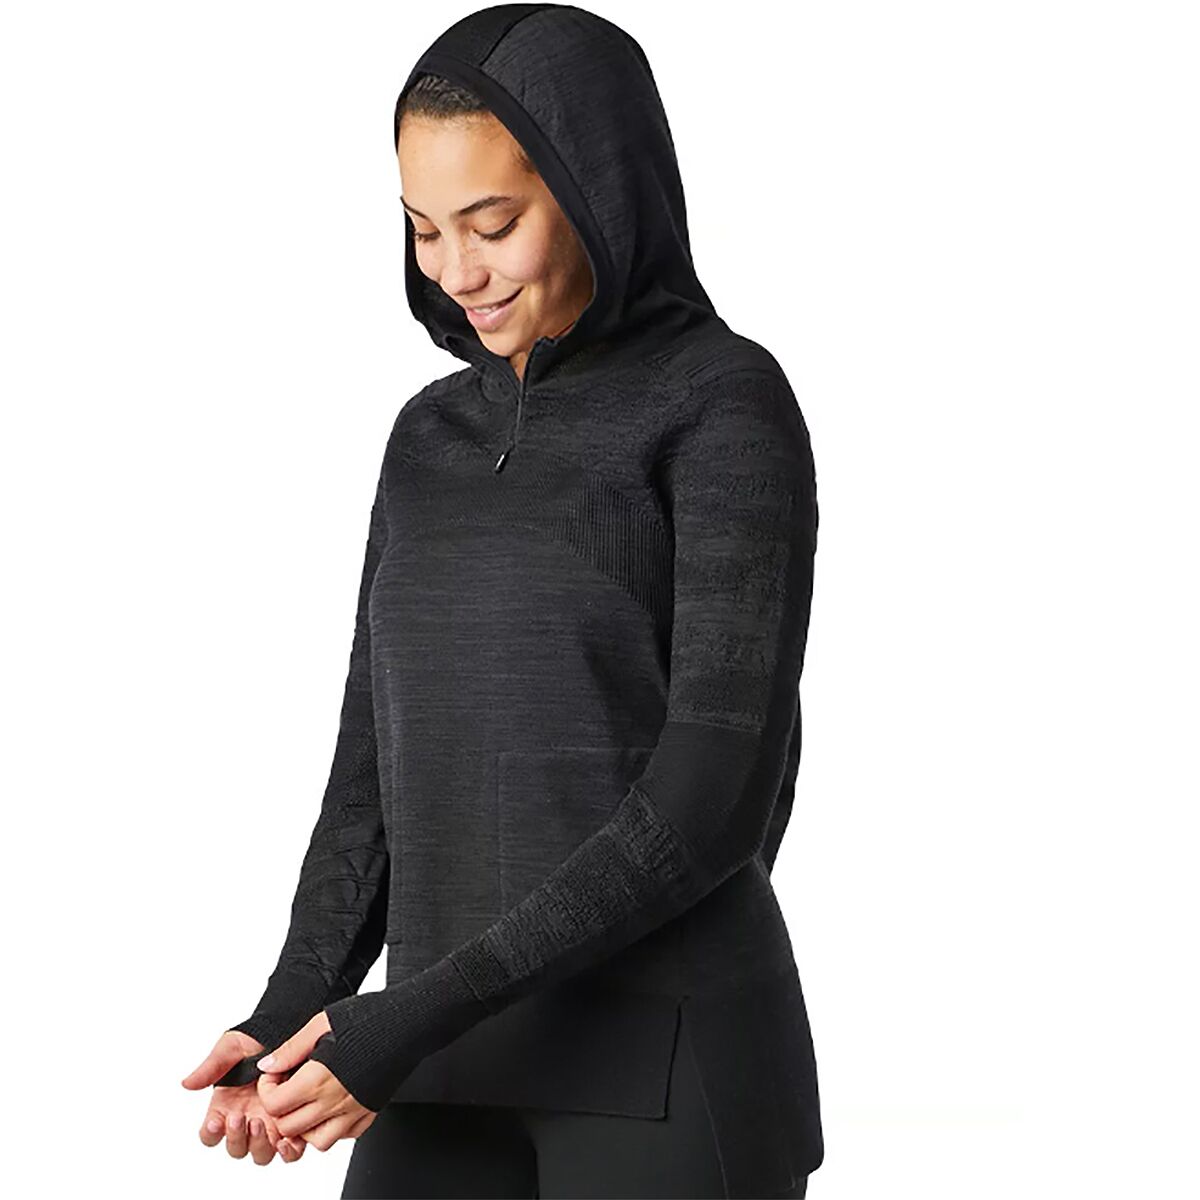 Smartwool Intraknit Merino Sport Fleece Pullover - Women's